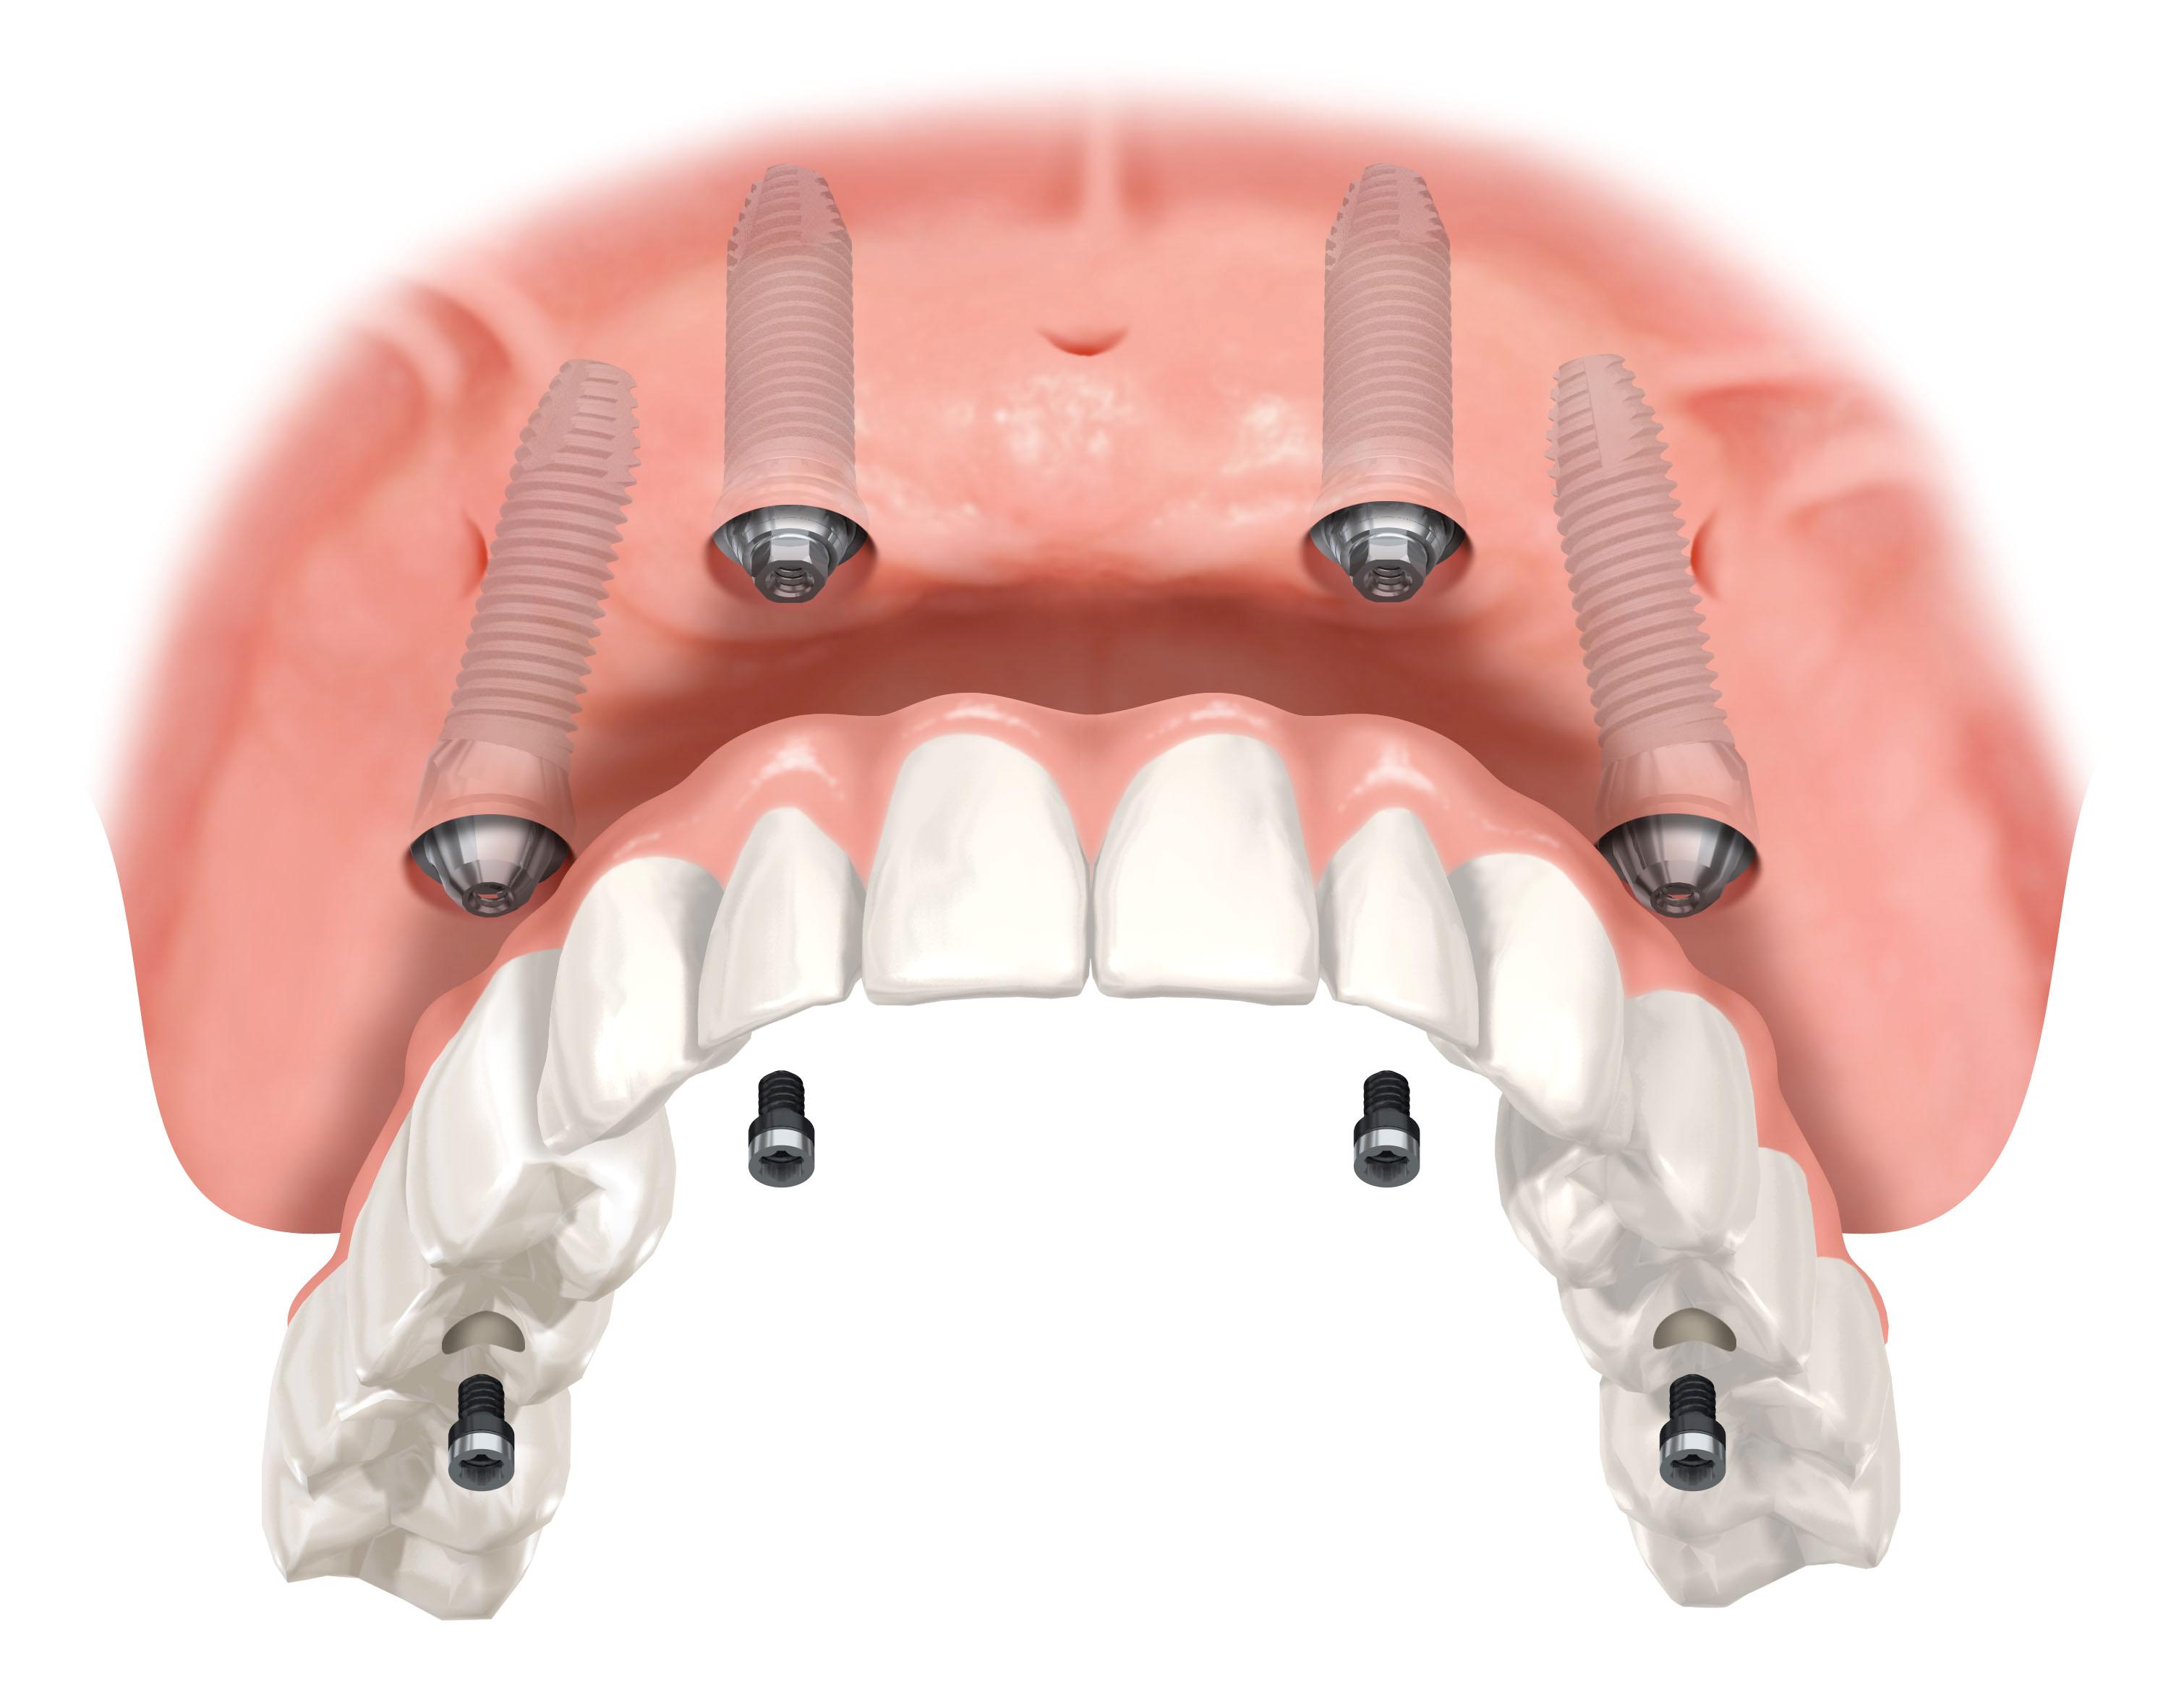 All-on-Four Implants vs Dentures